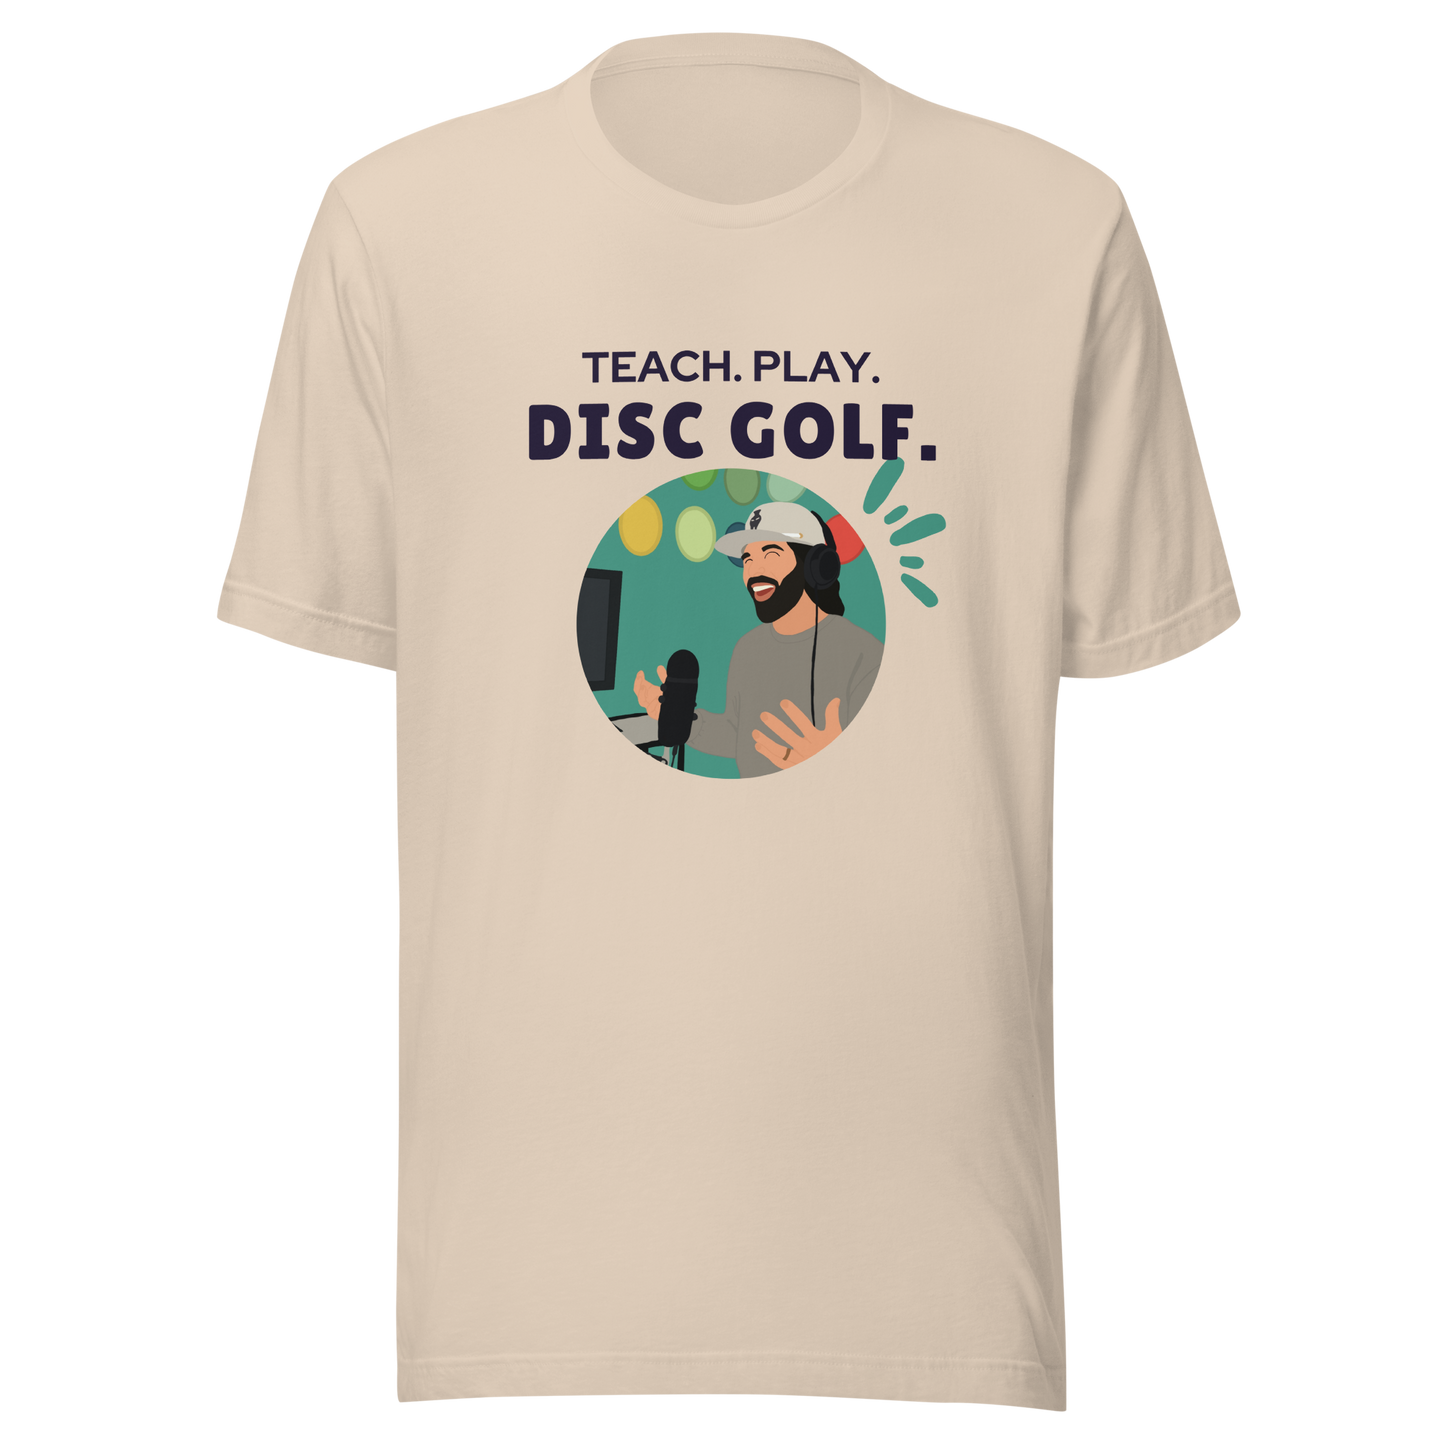 Teach. Play. Disc Golf. t-shirt